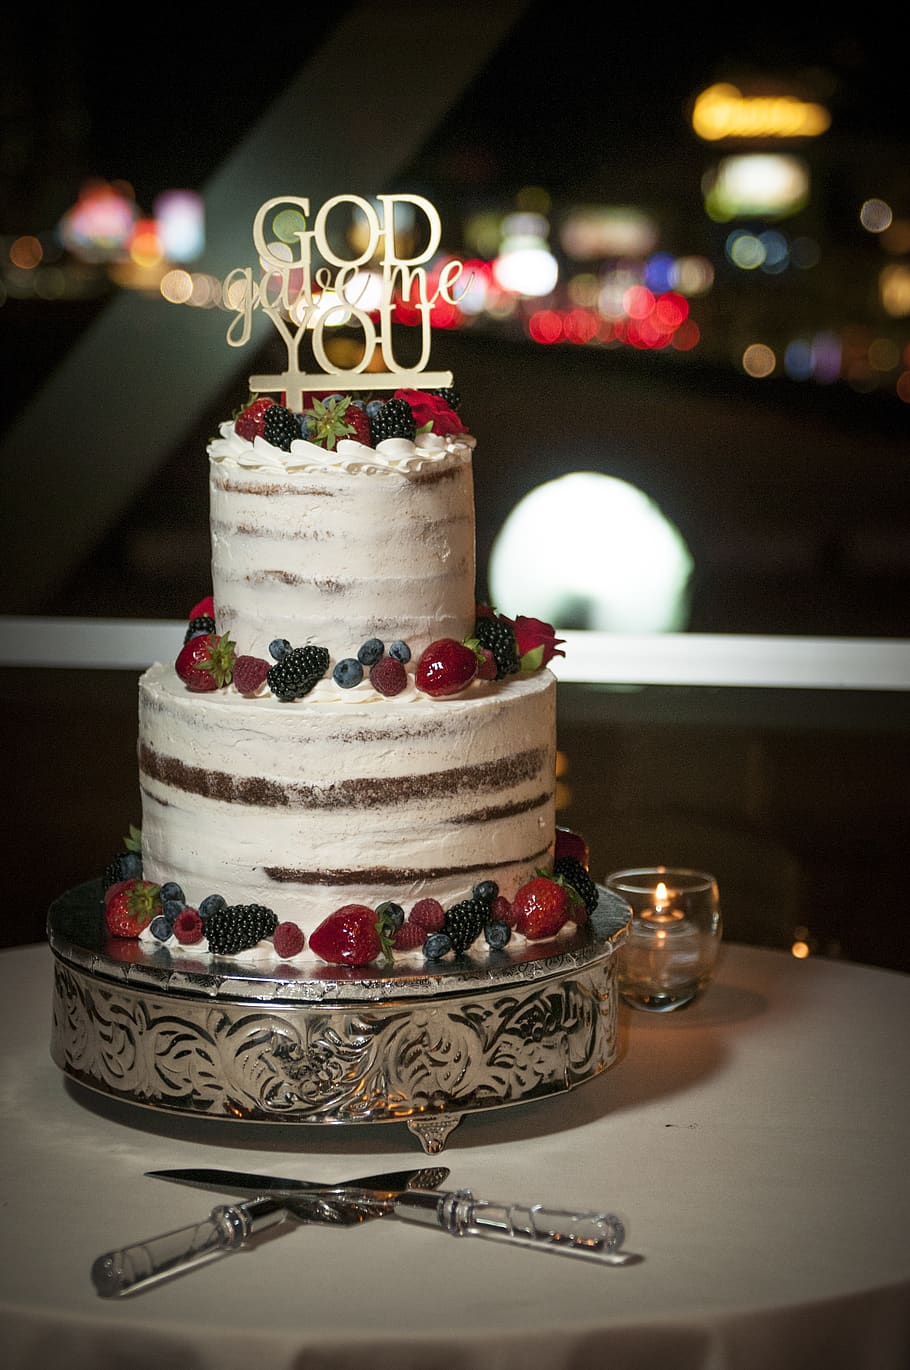 boda, pastel, pastel de bodas, fiesta, postre, comida dulce, dulce, comida y bebida, comida, indulgencia